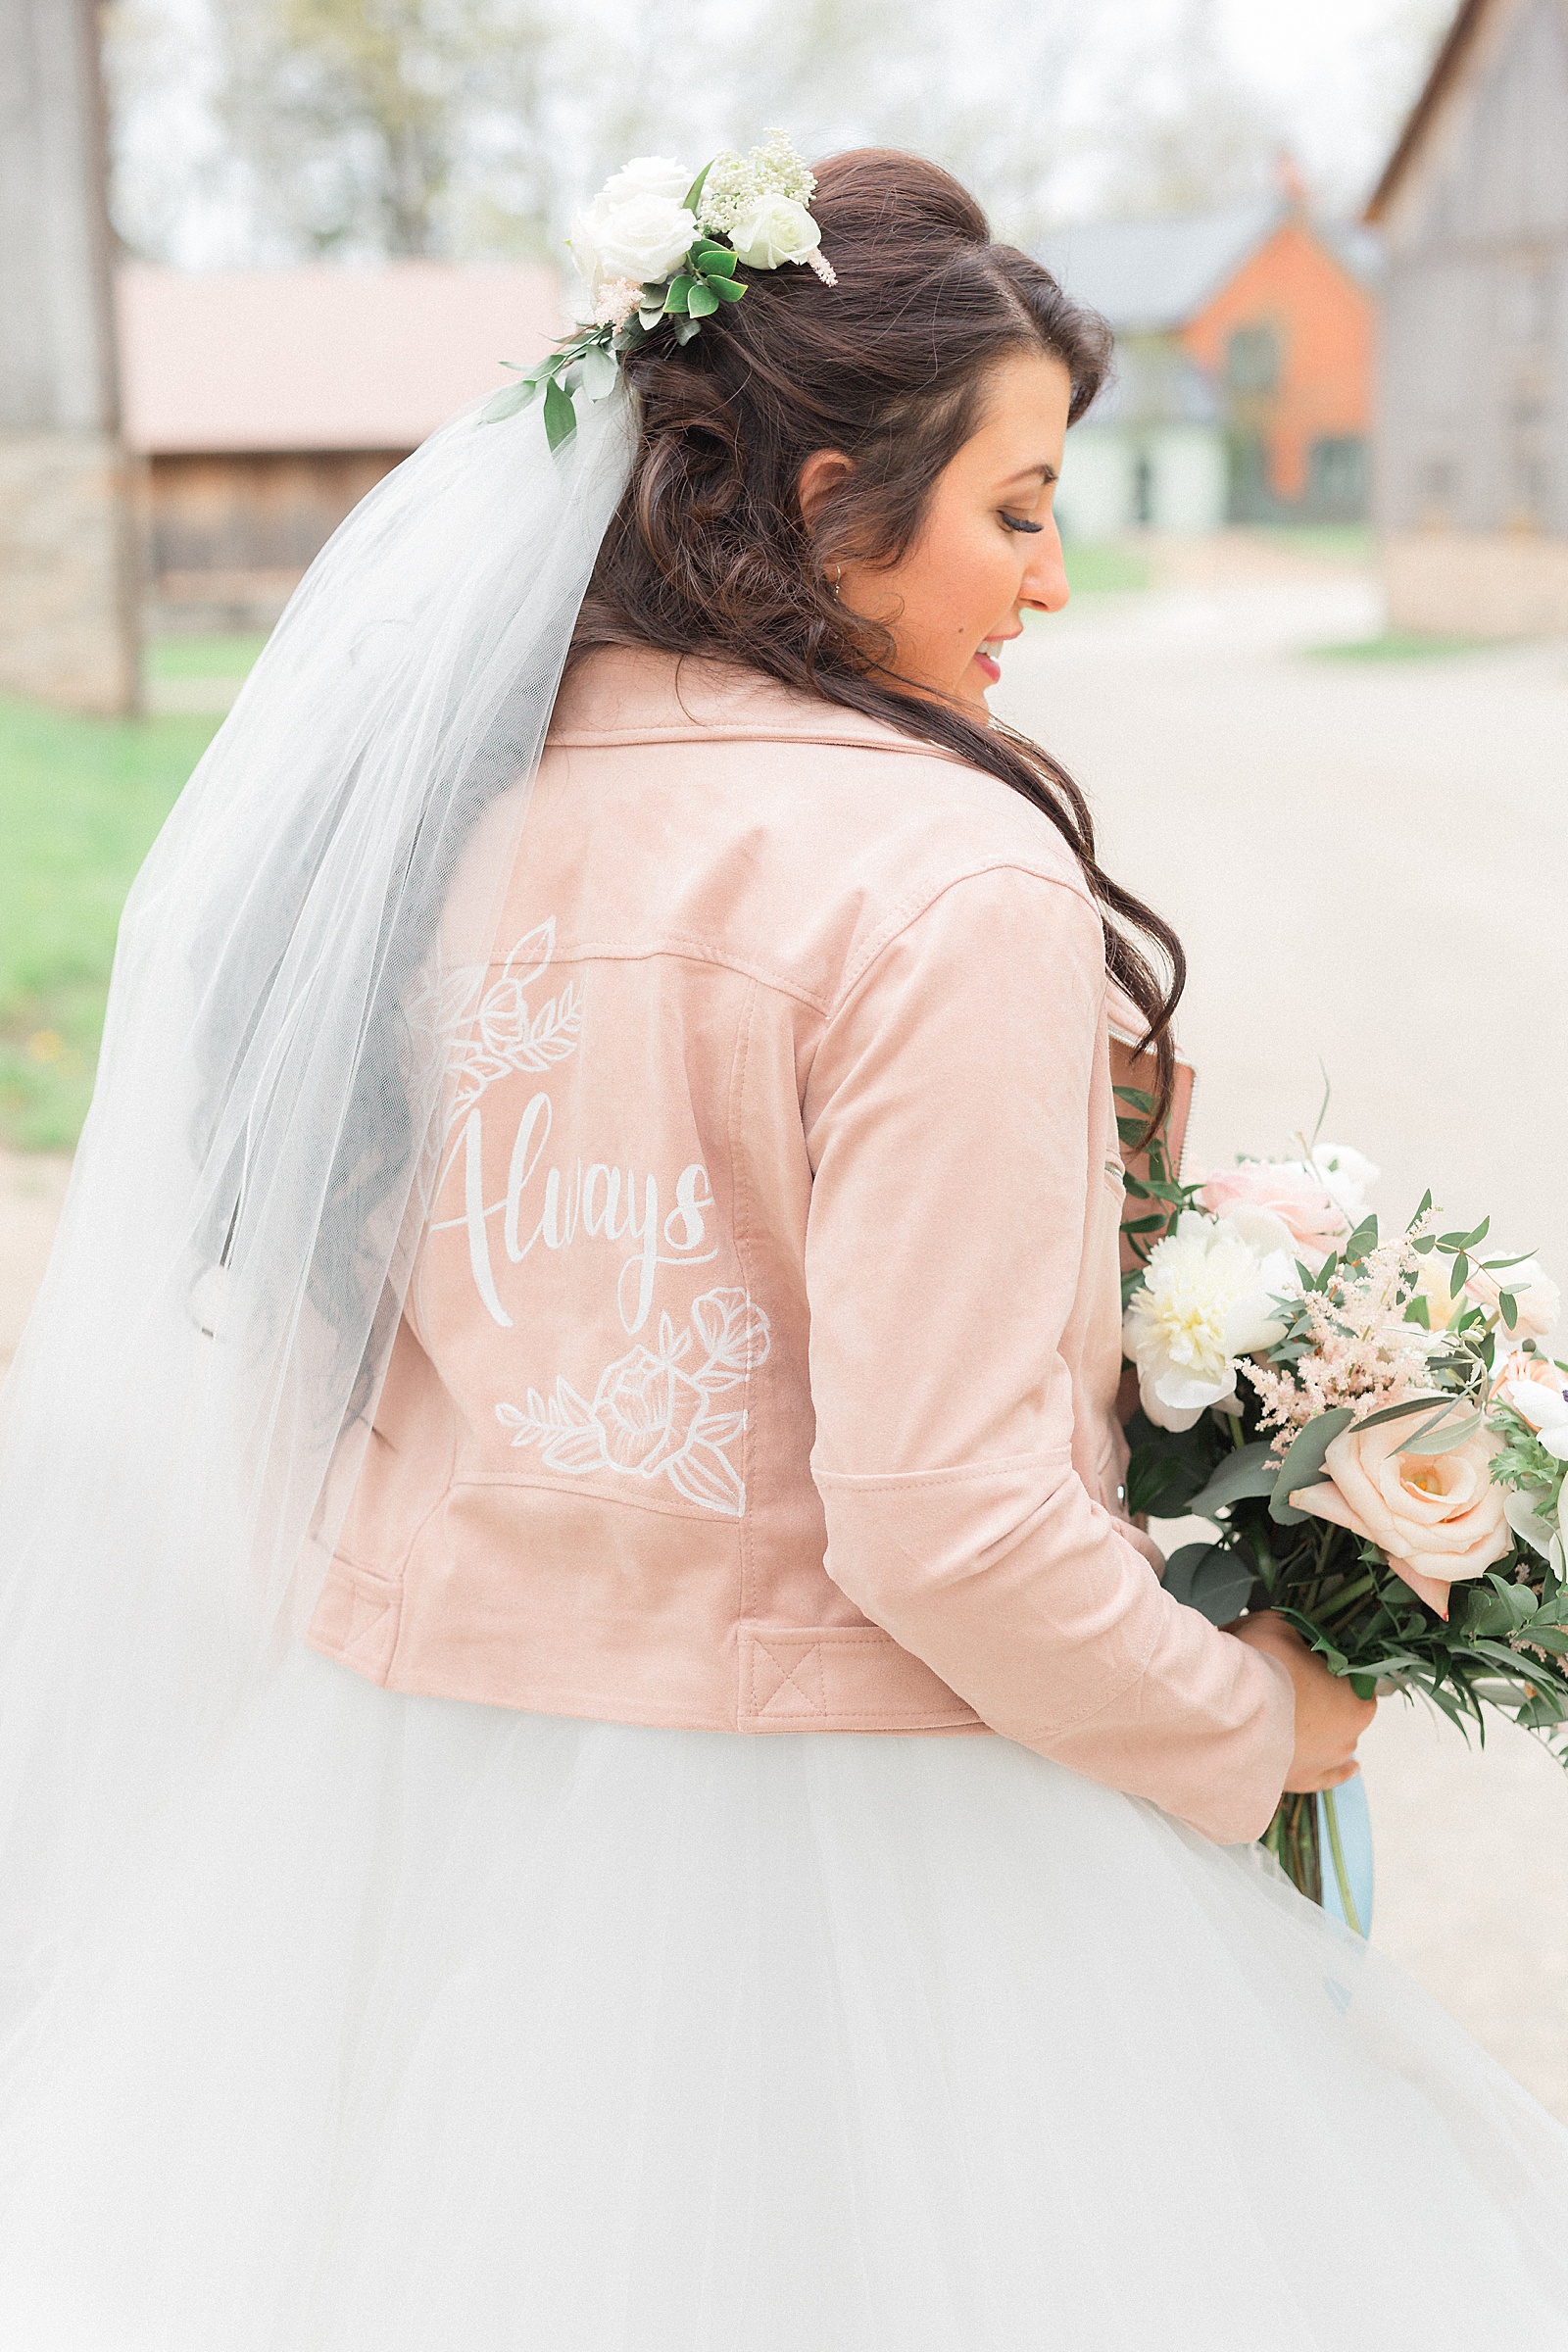 Bride wearing calligraphed jacket